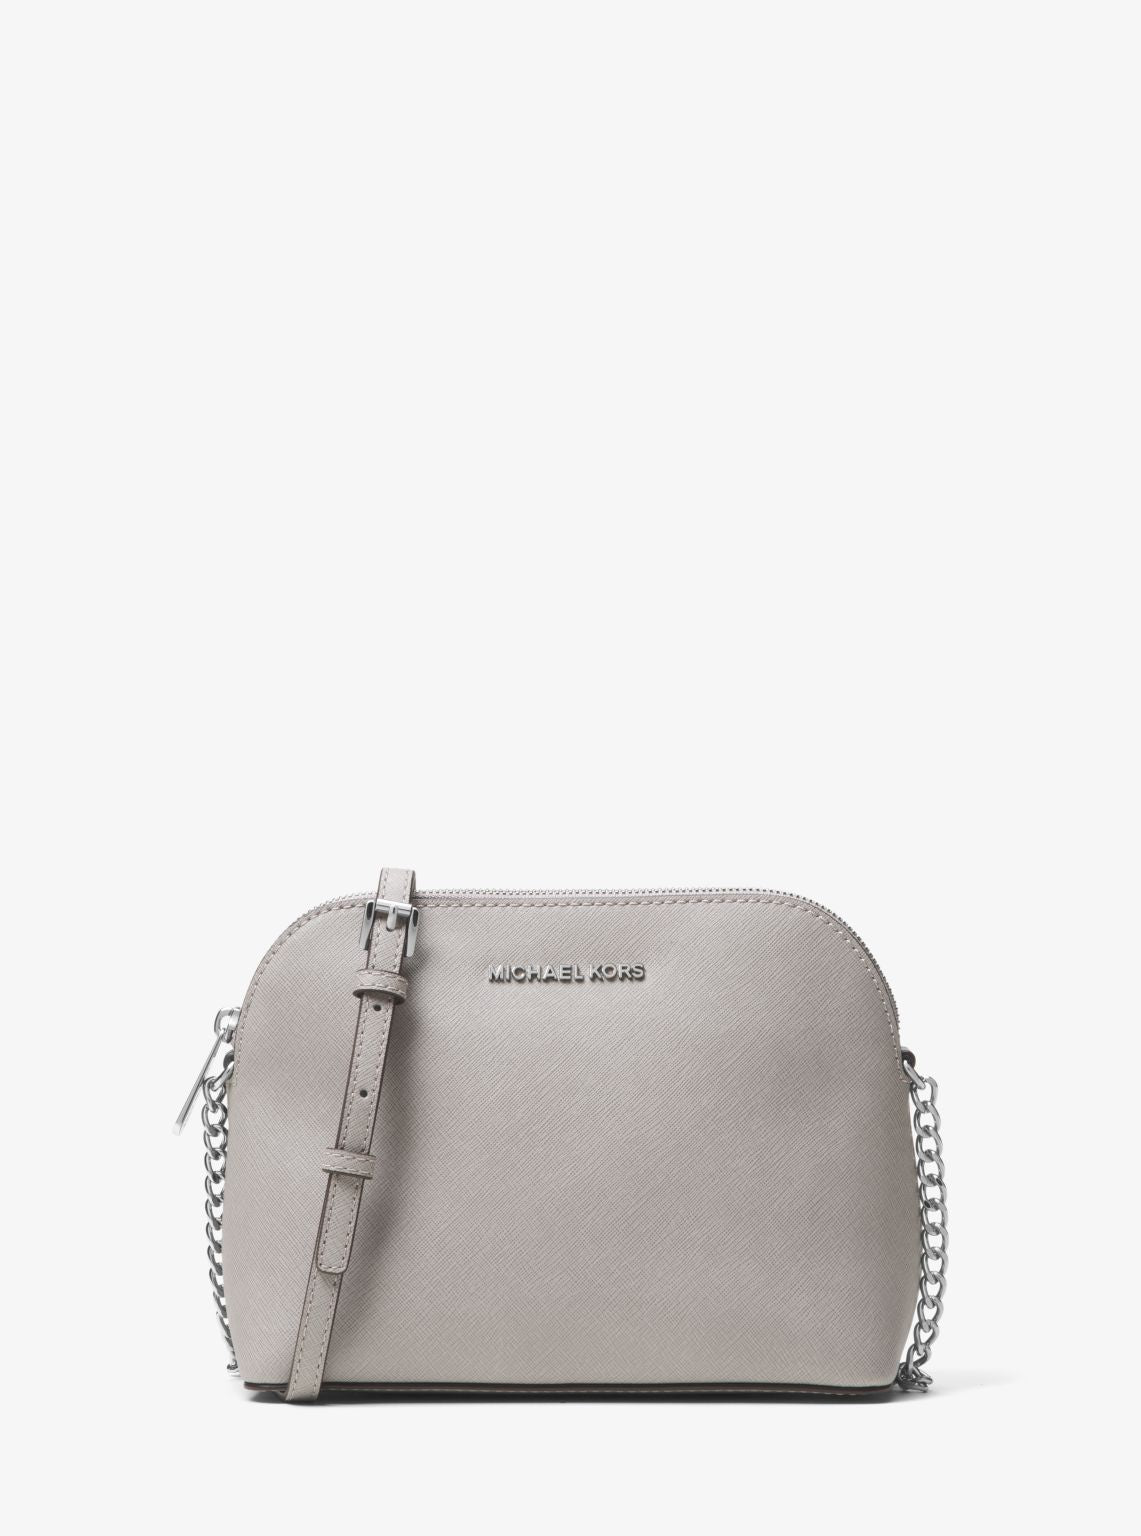 Cindy Large Saffiano Leather Crossbody Bag